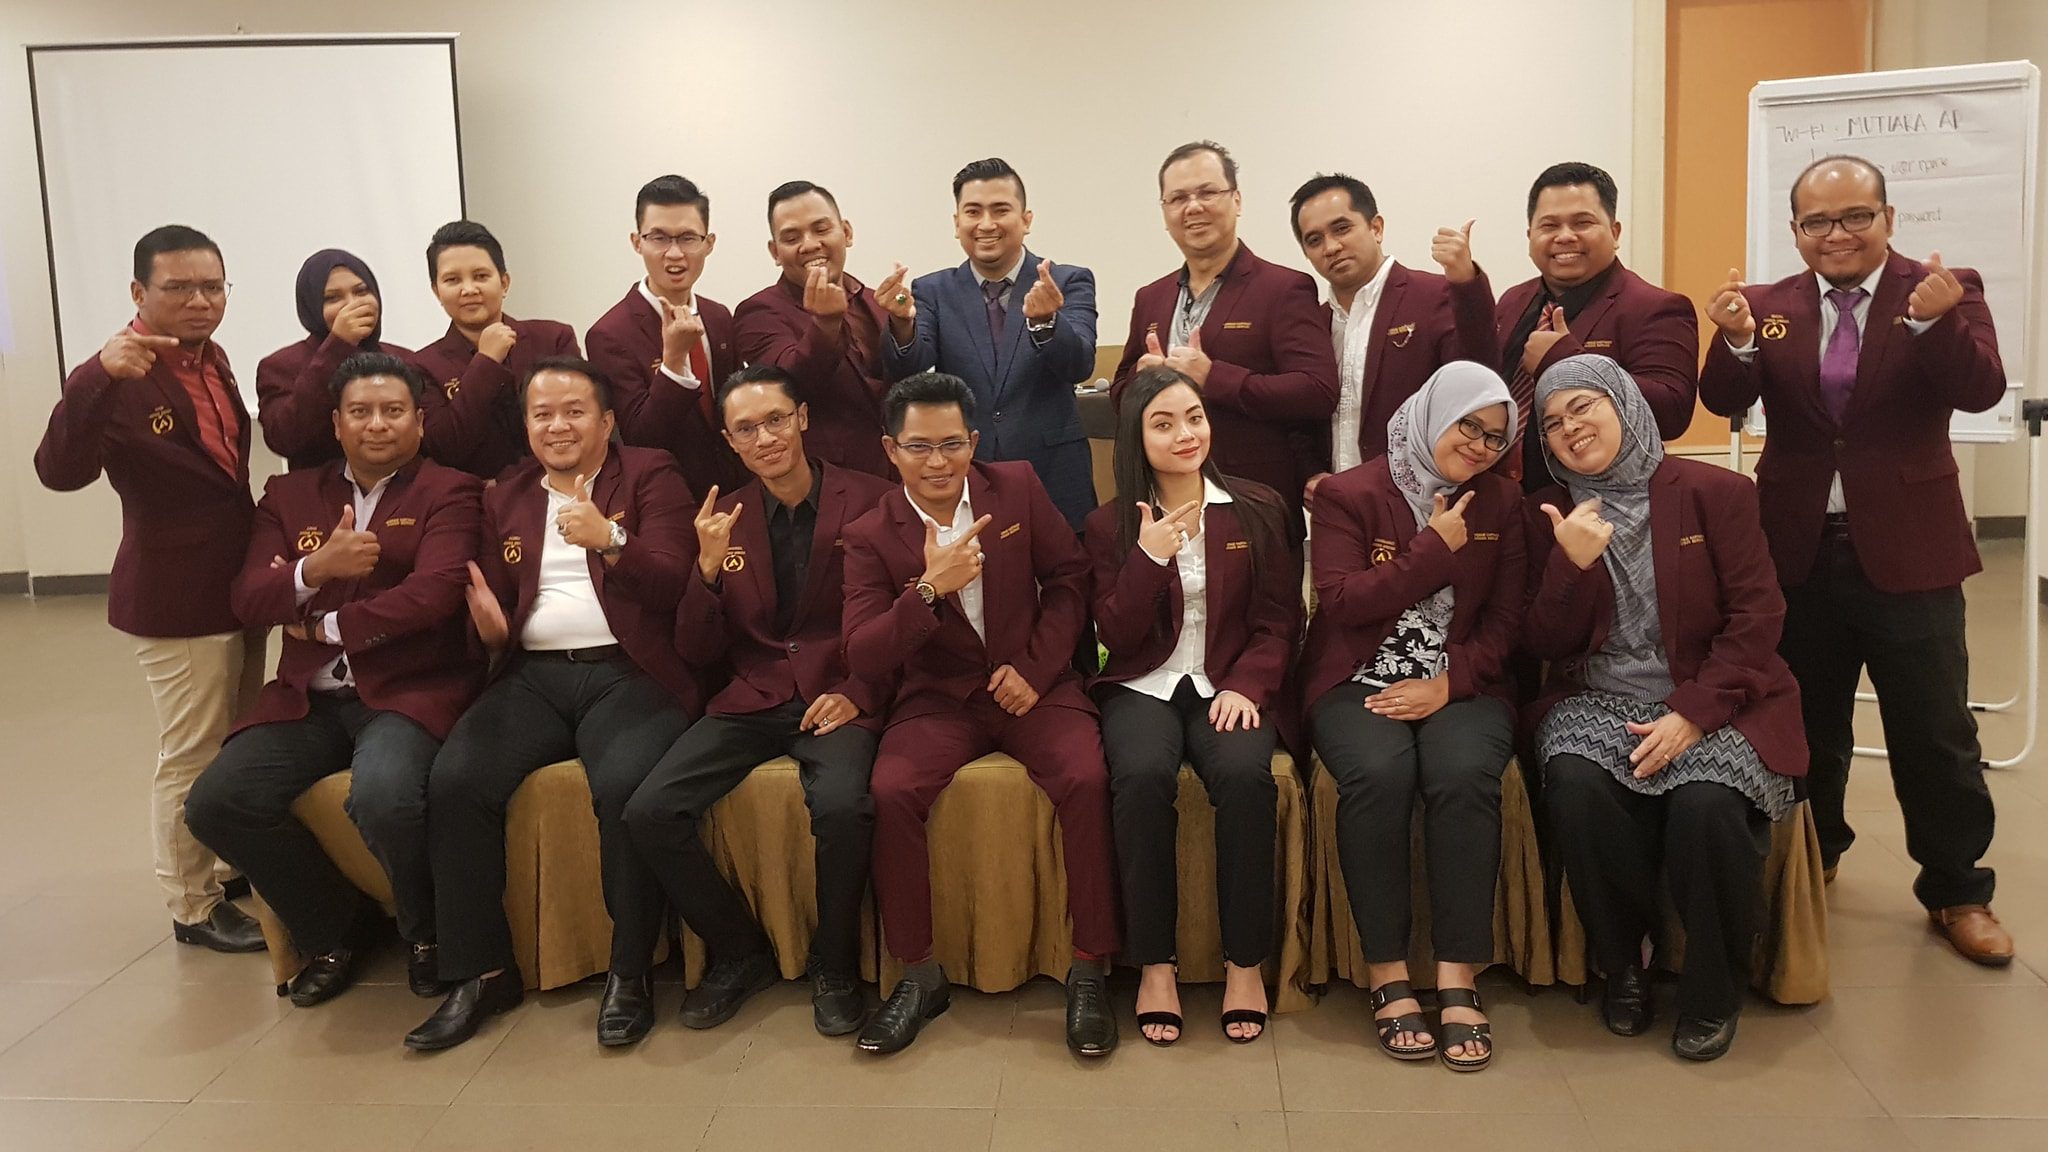 Overseas Convention 2018 - Bandung, Indonesia 7